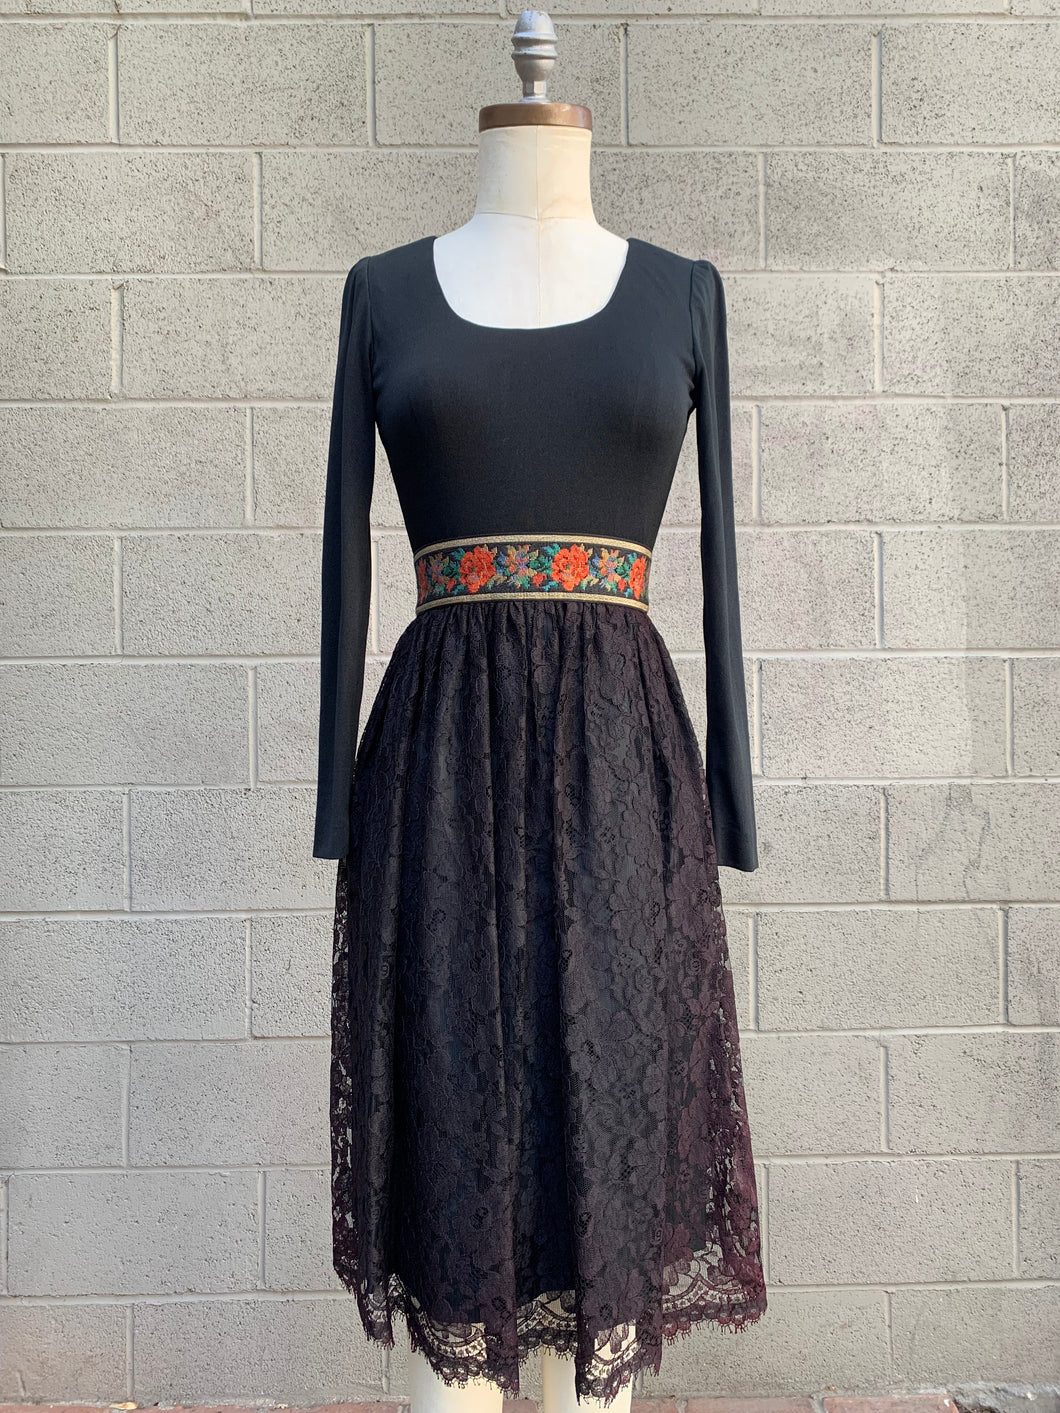 1970’s embroidered waist black dress